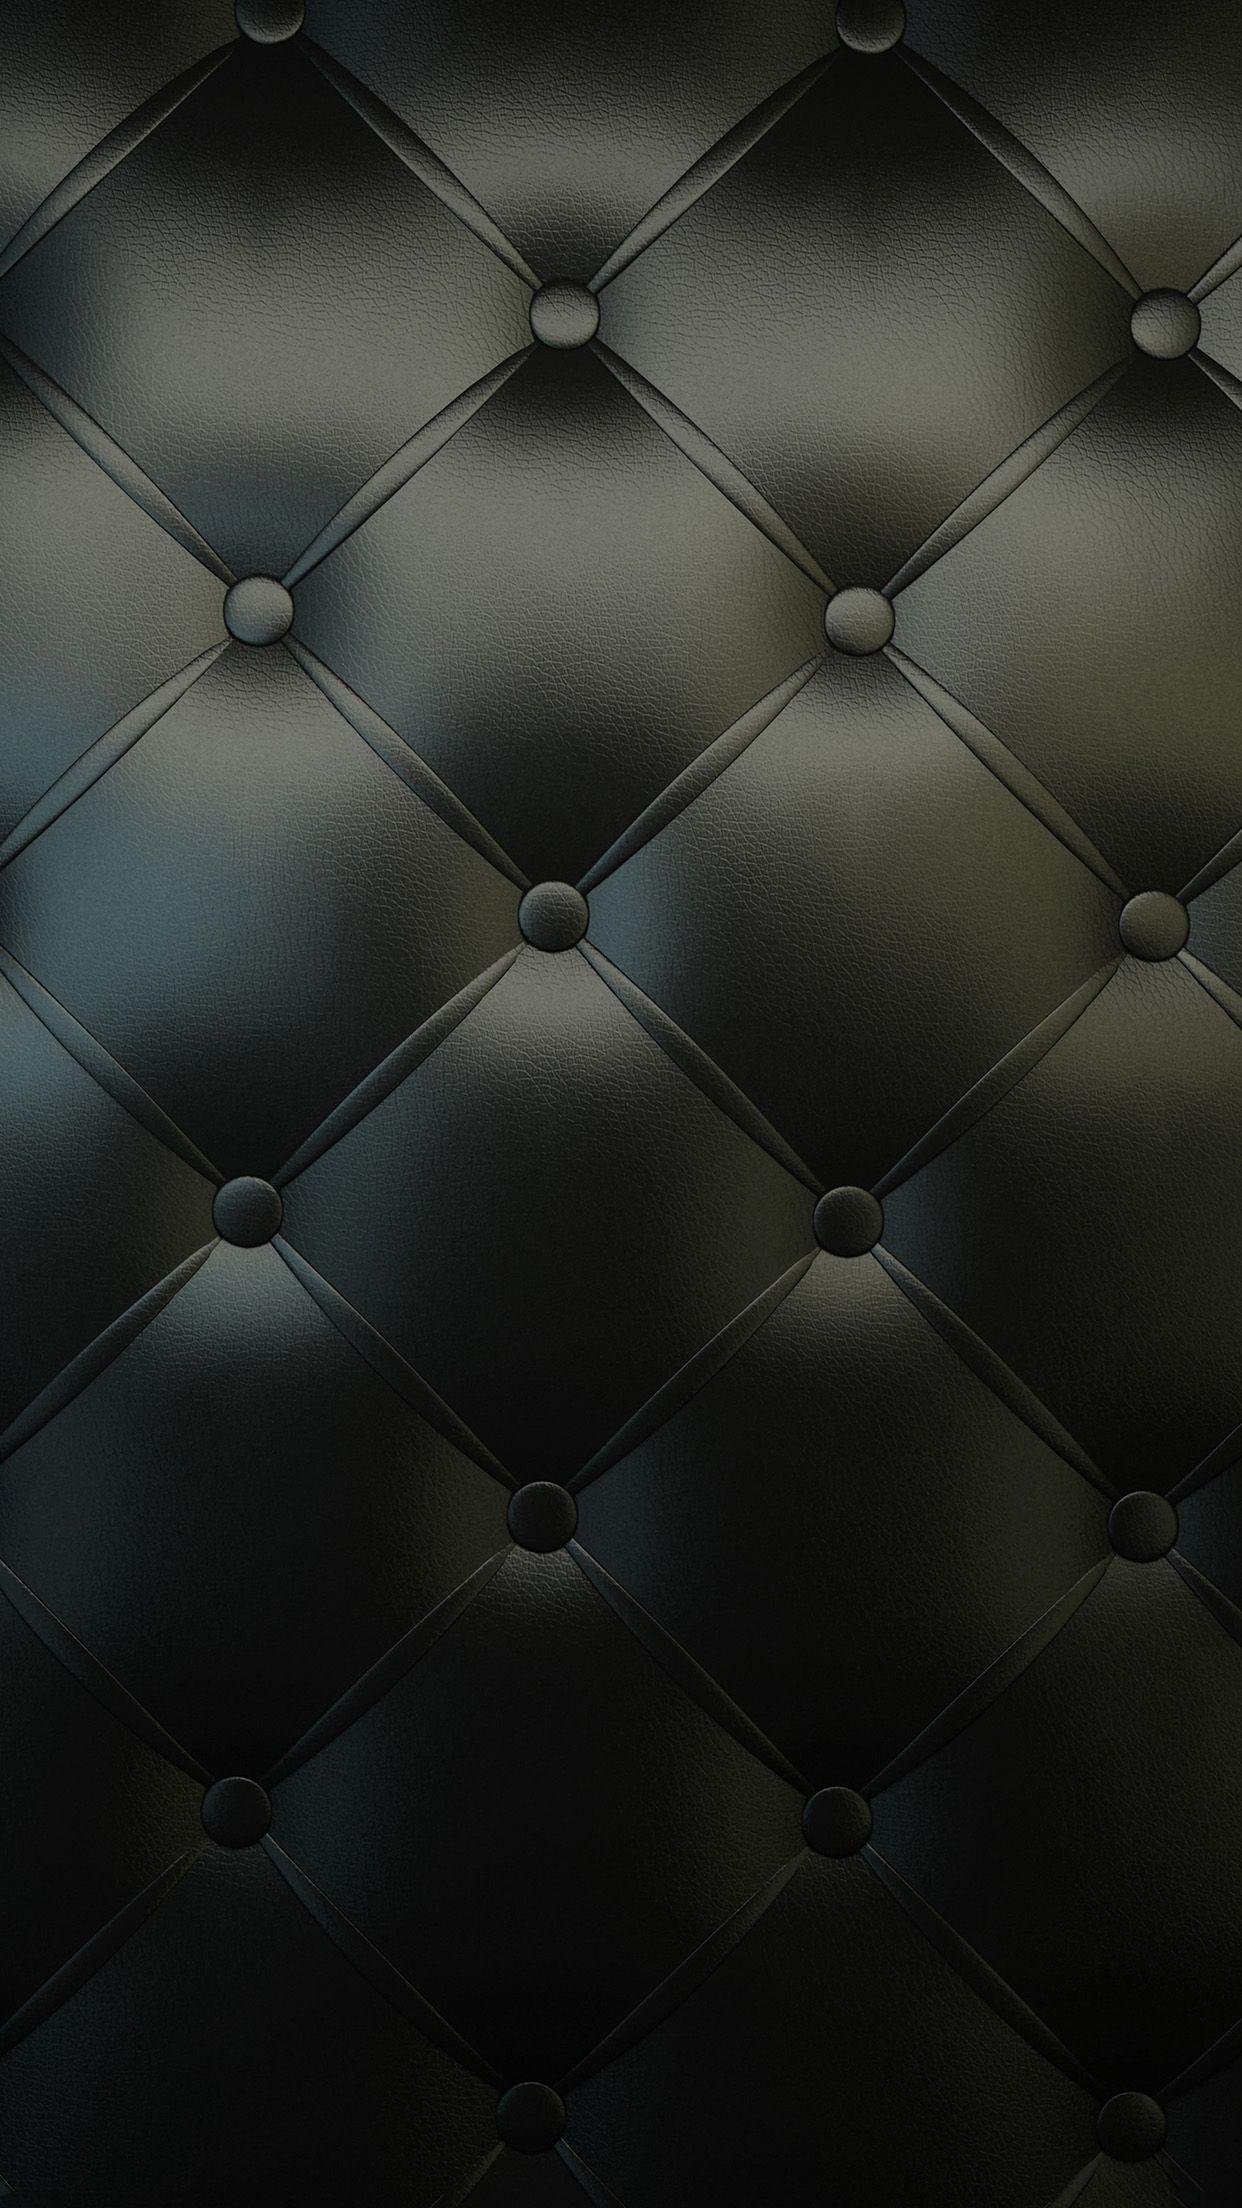 Dark Sofa Texture Android Wallpaper free download